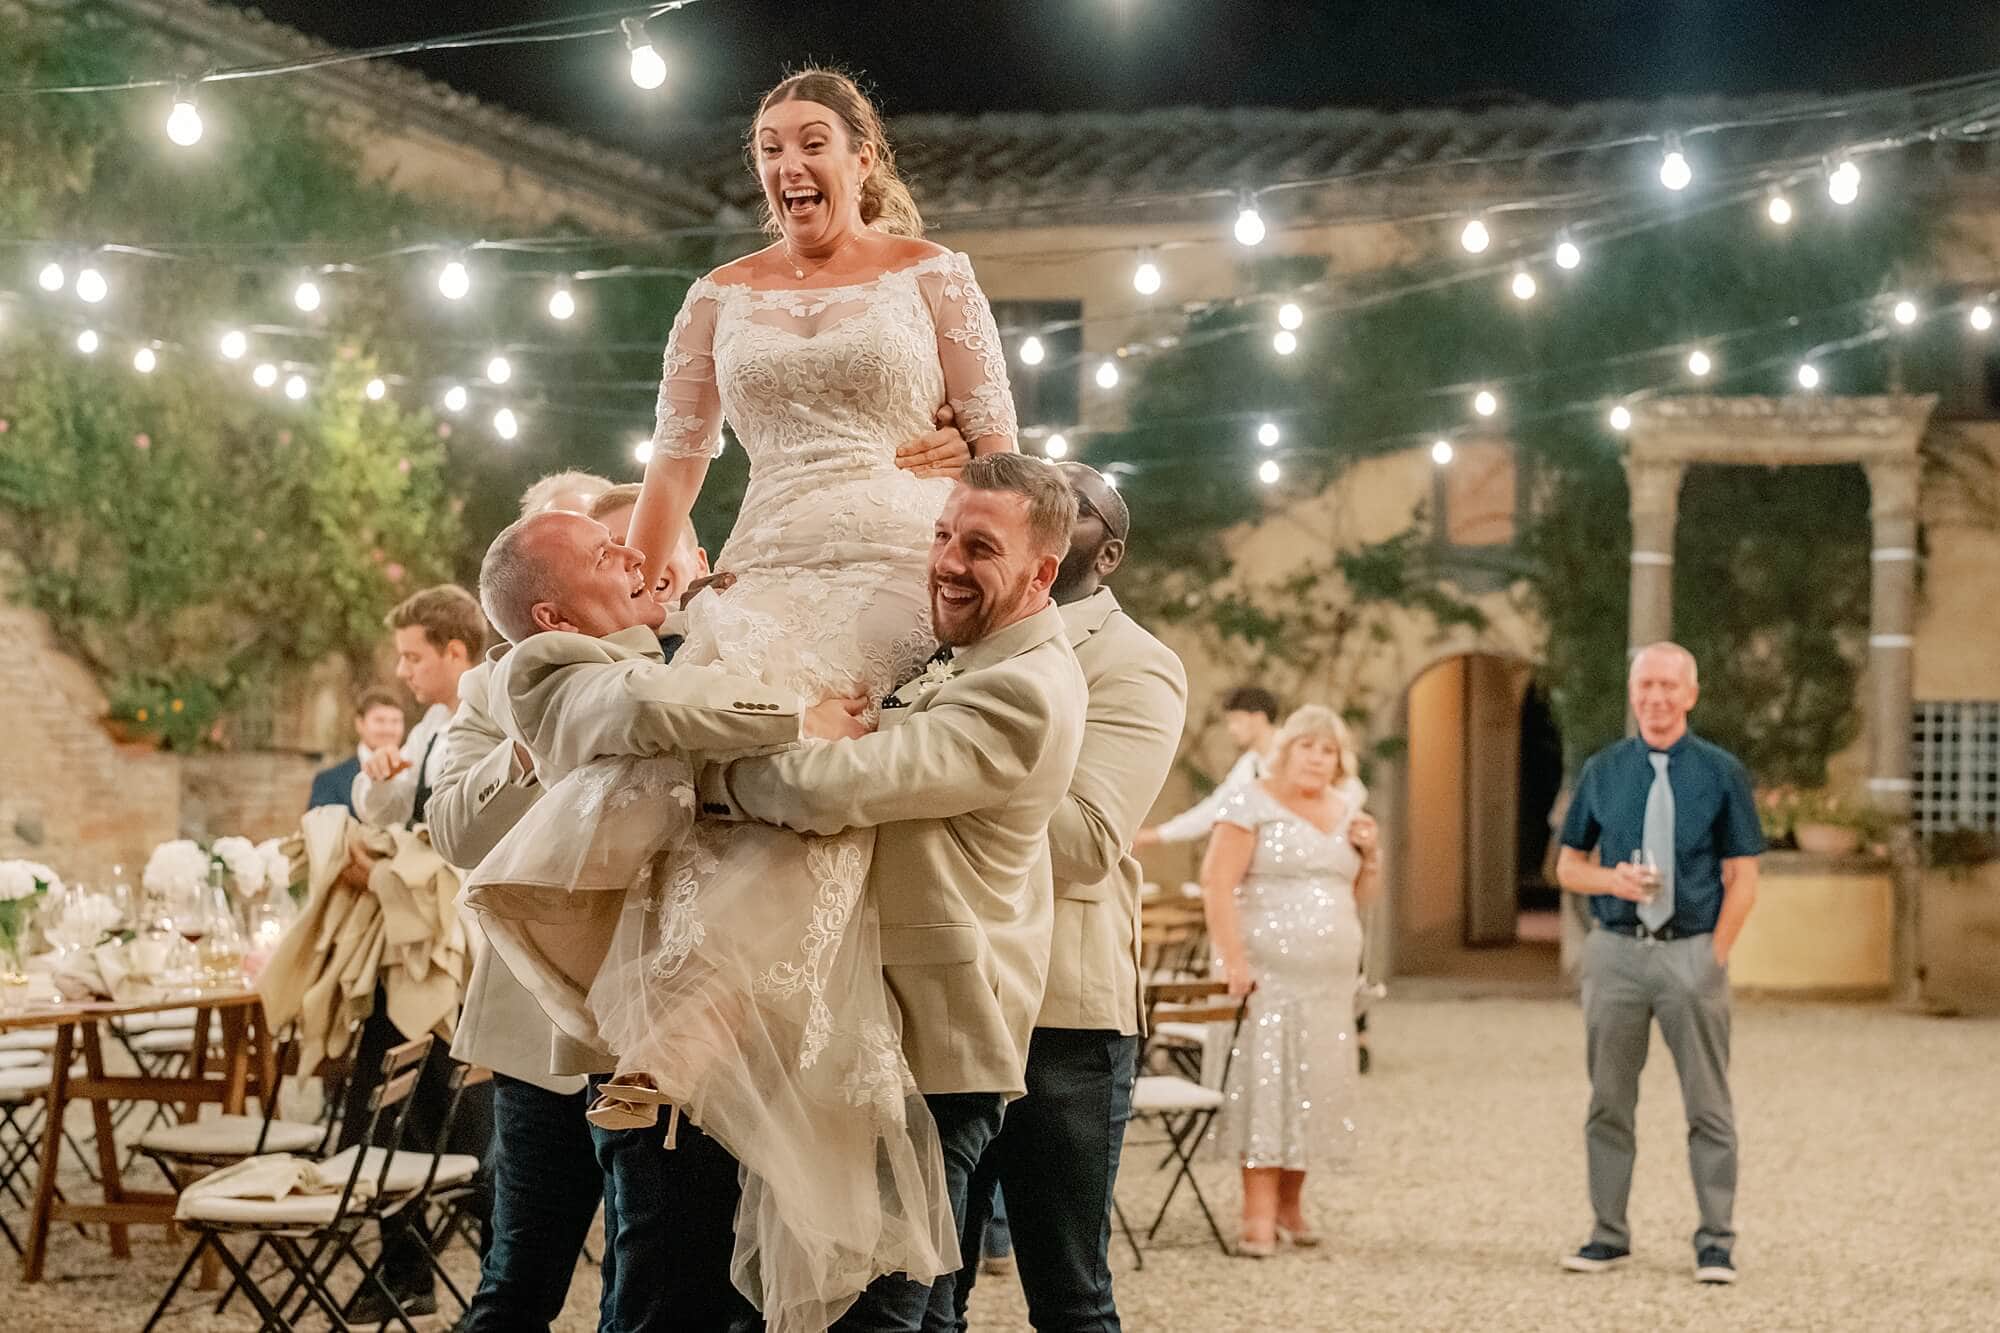 lifting the bride at villa catignano